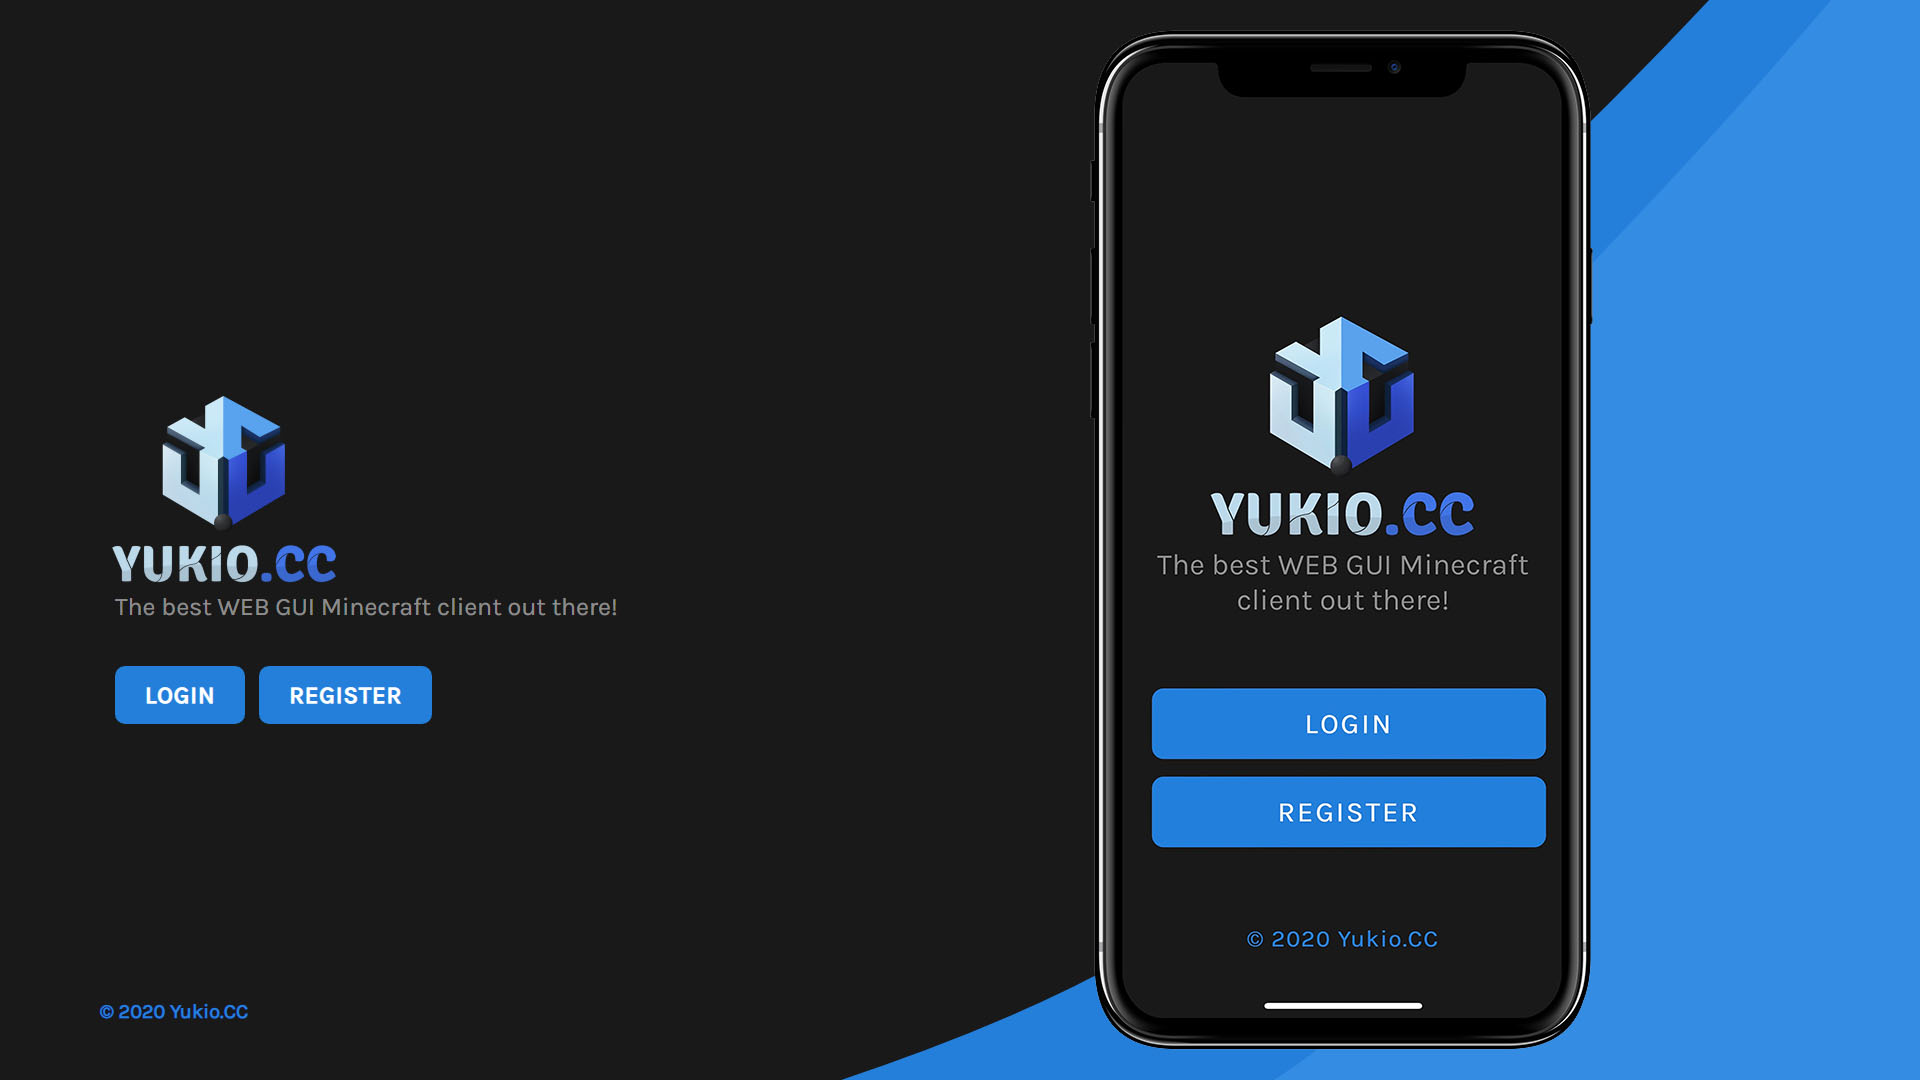 Yukio CC custom website